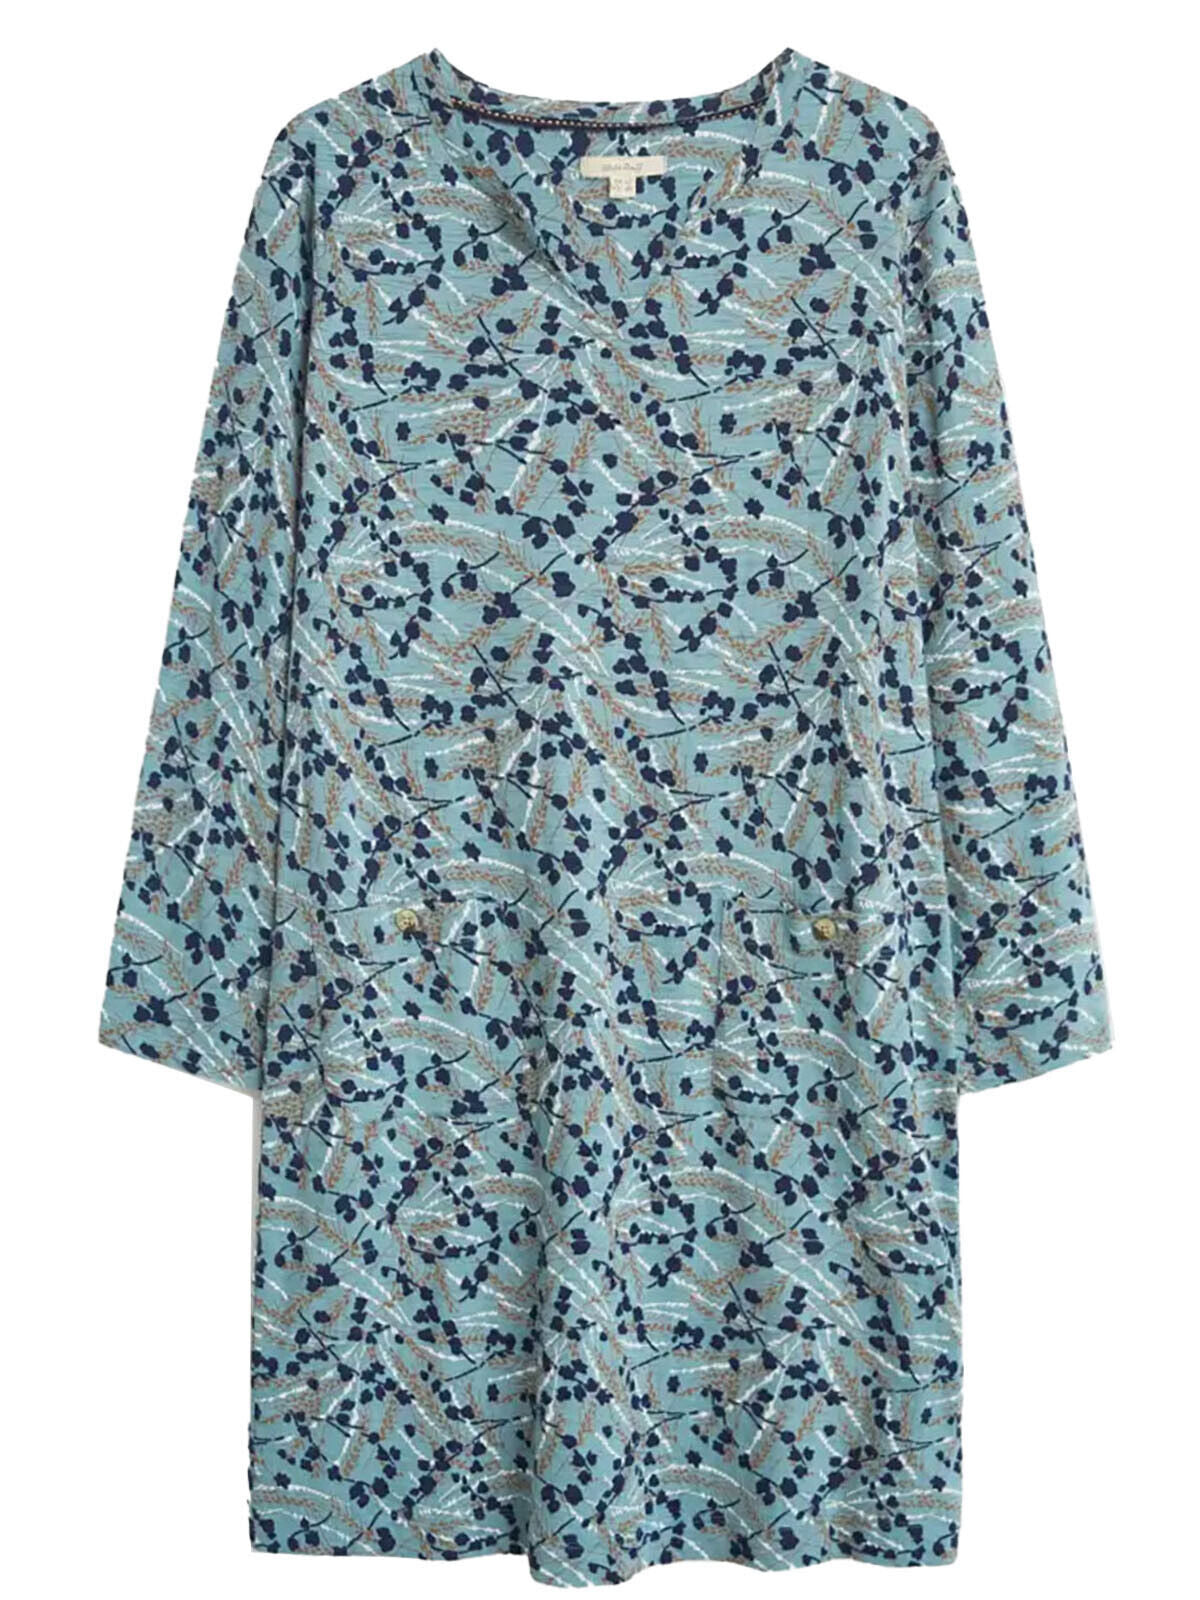 EX White Stuff Teal V Neck Bea Fairtrade Dress Sizes 10, 12, 14, 16, 22 RRP £59